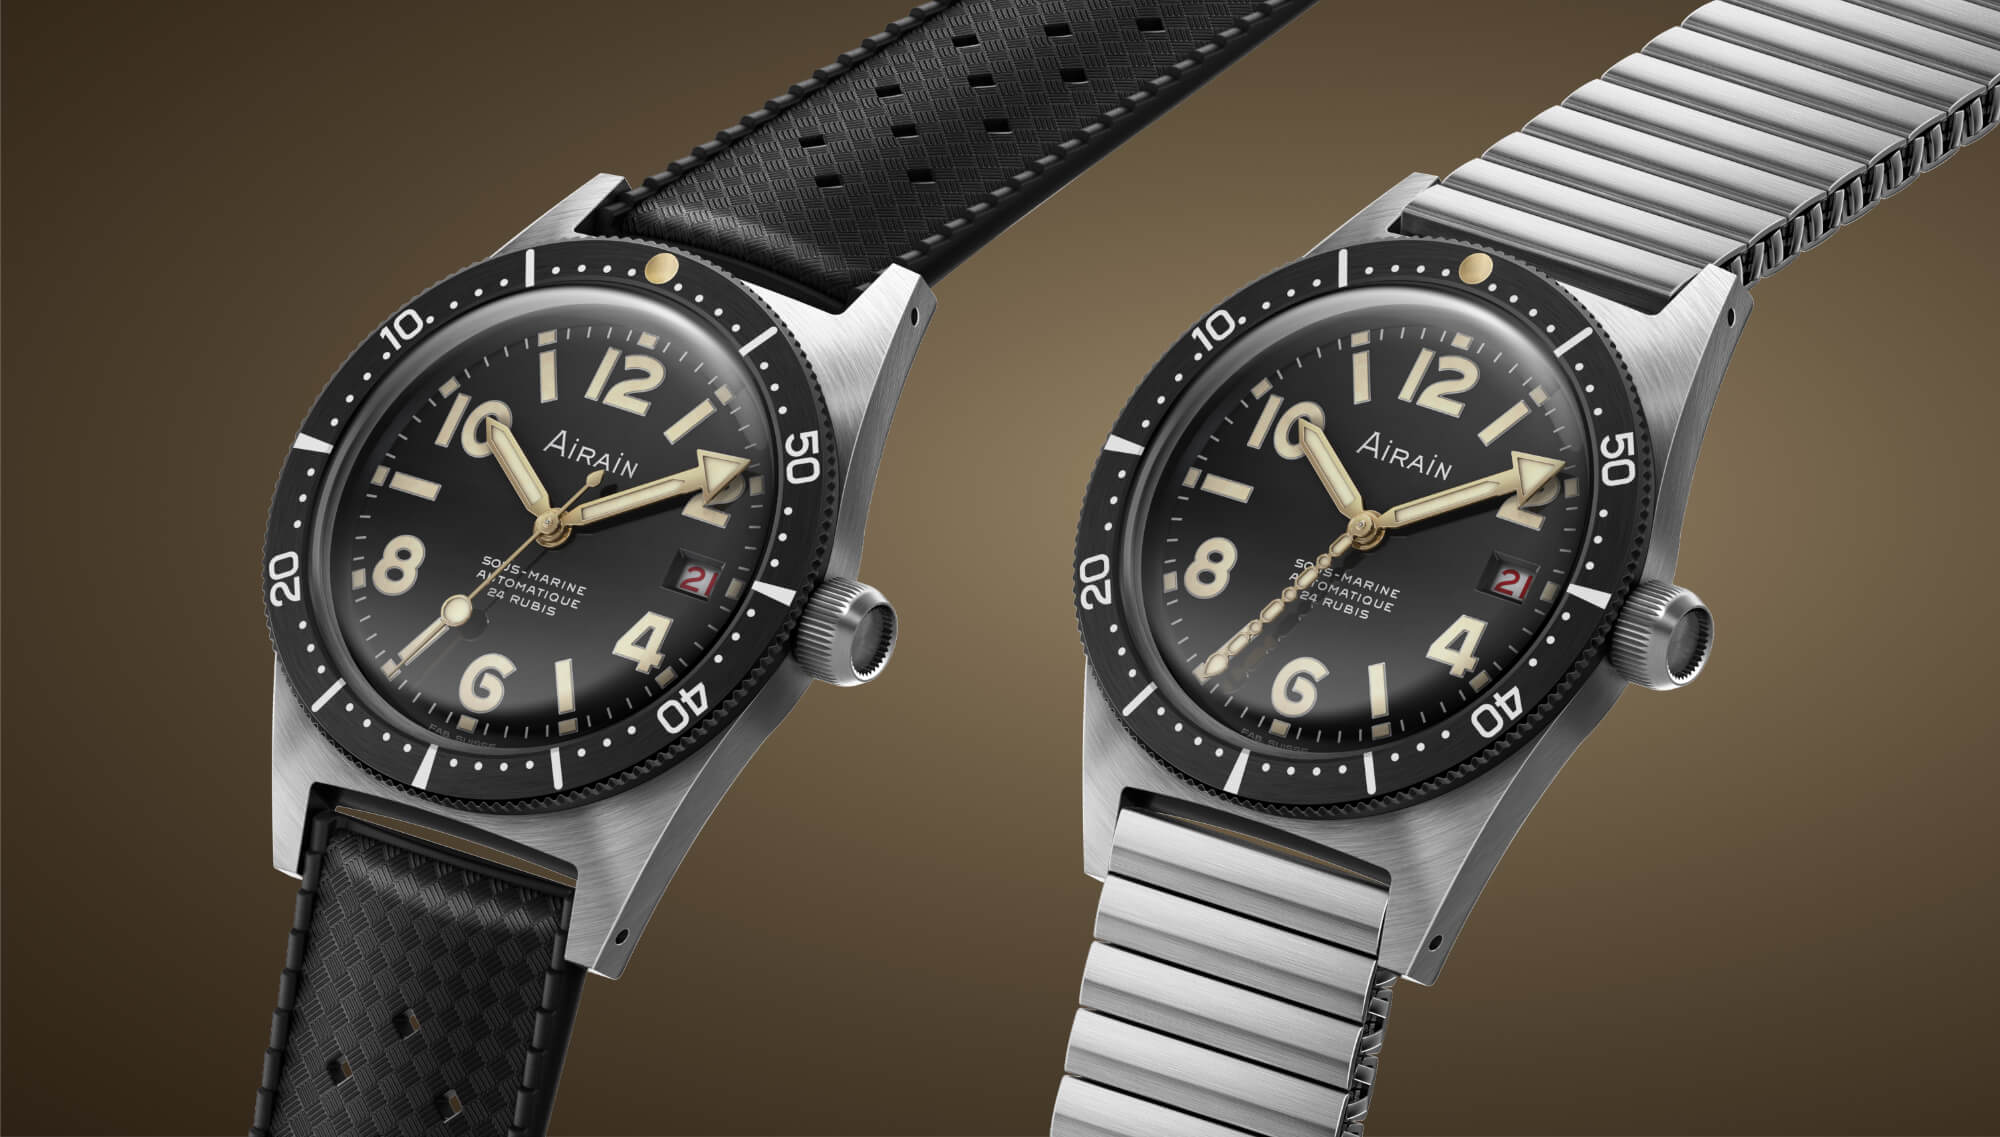 Airain Watches воссоздает Sous-Marine, классический скиндайвер с характером